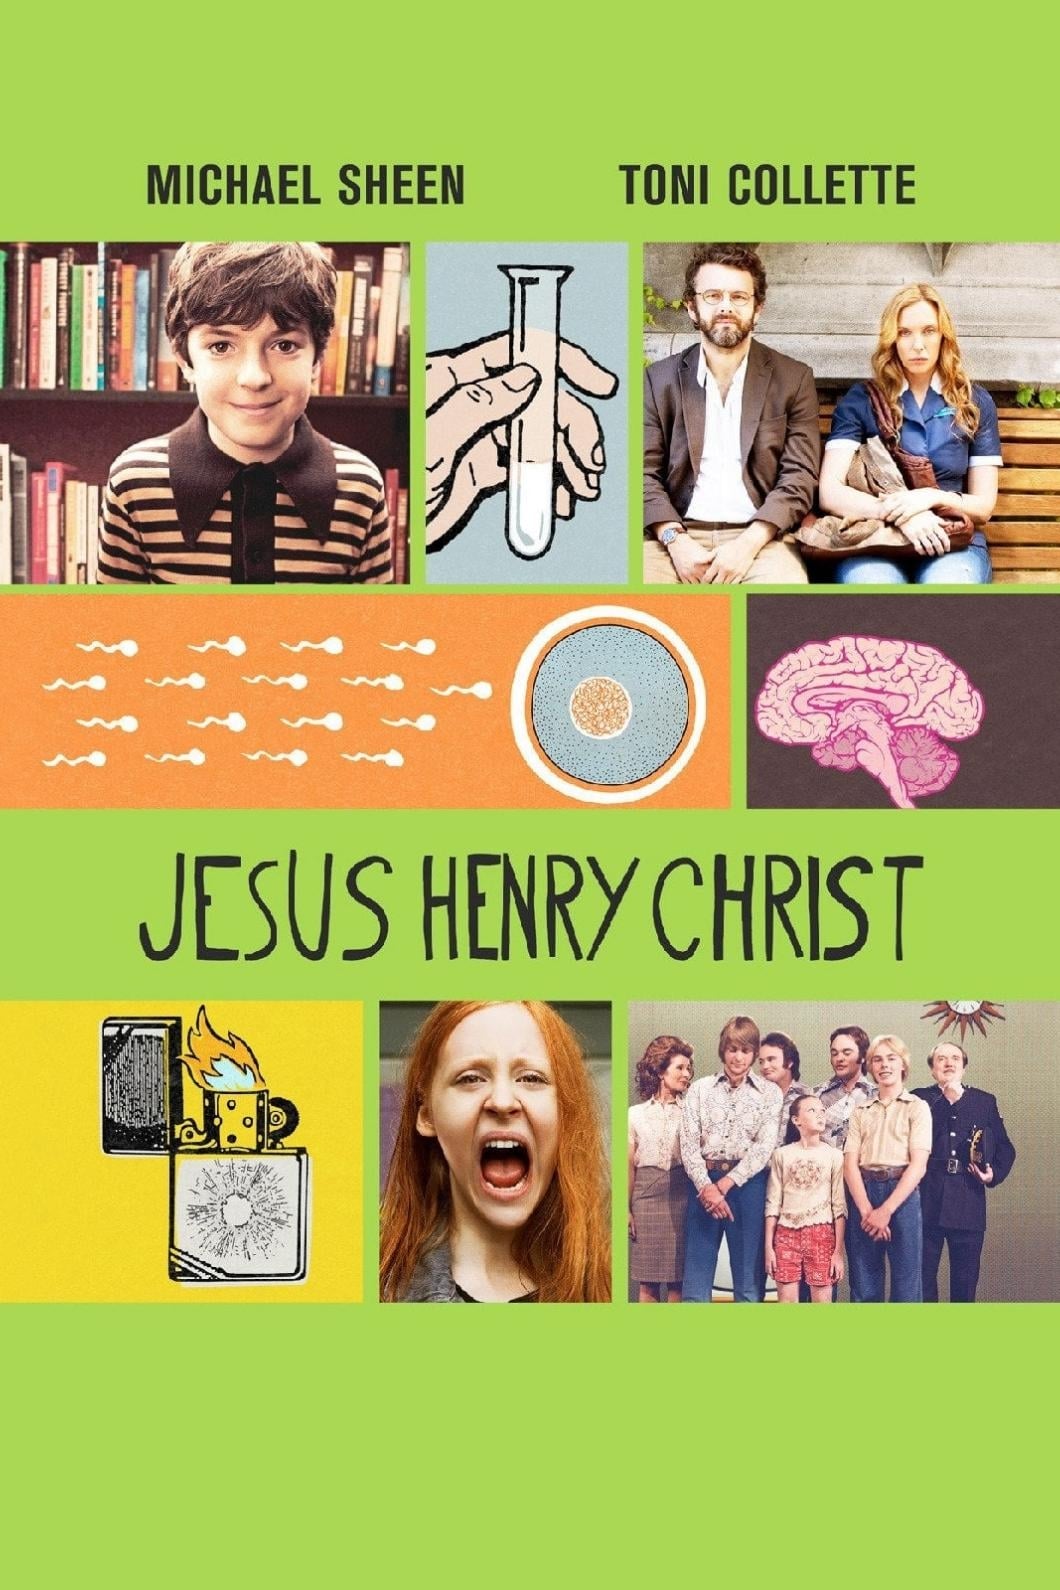 Jesus Henry Christ [Sub-ITA] [HD] (2011)